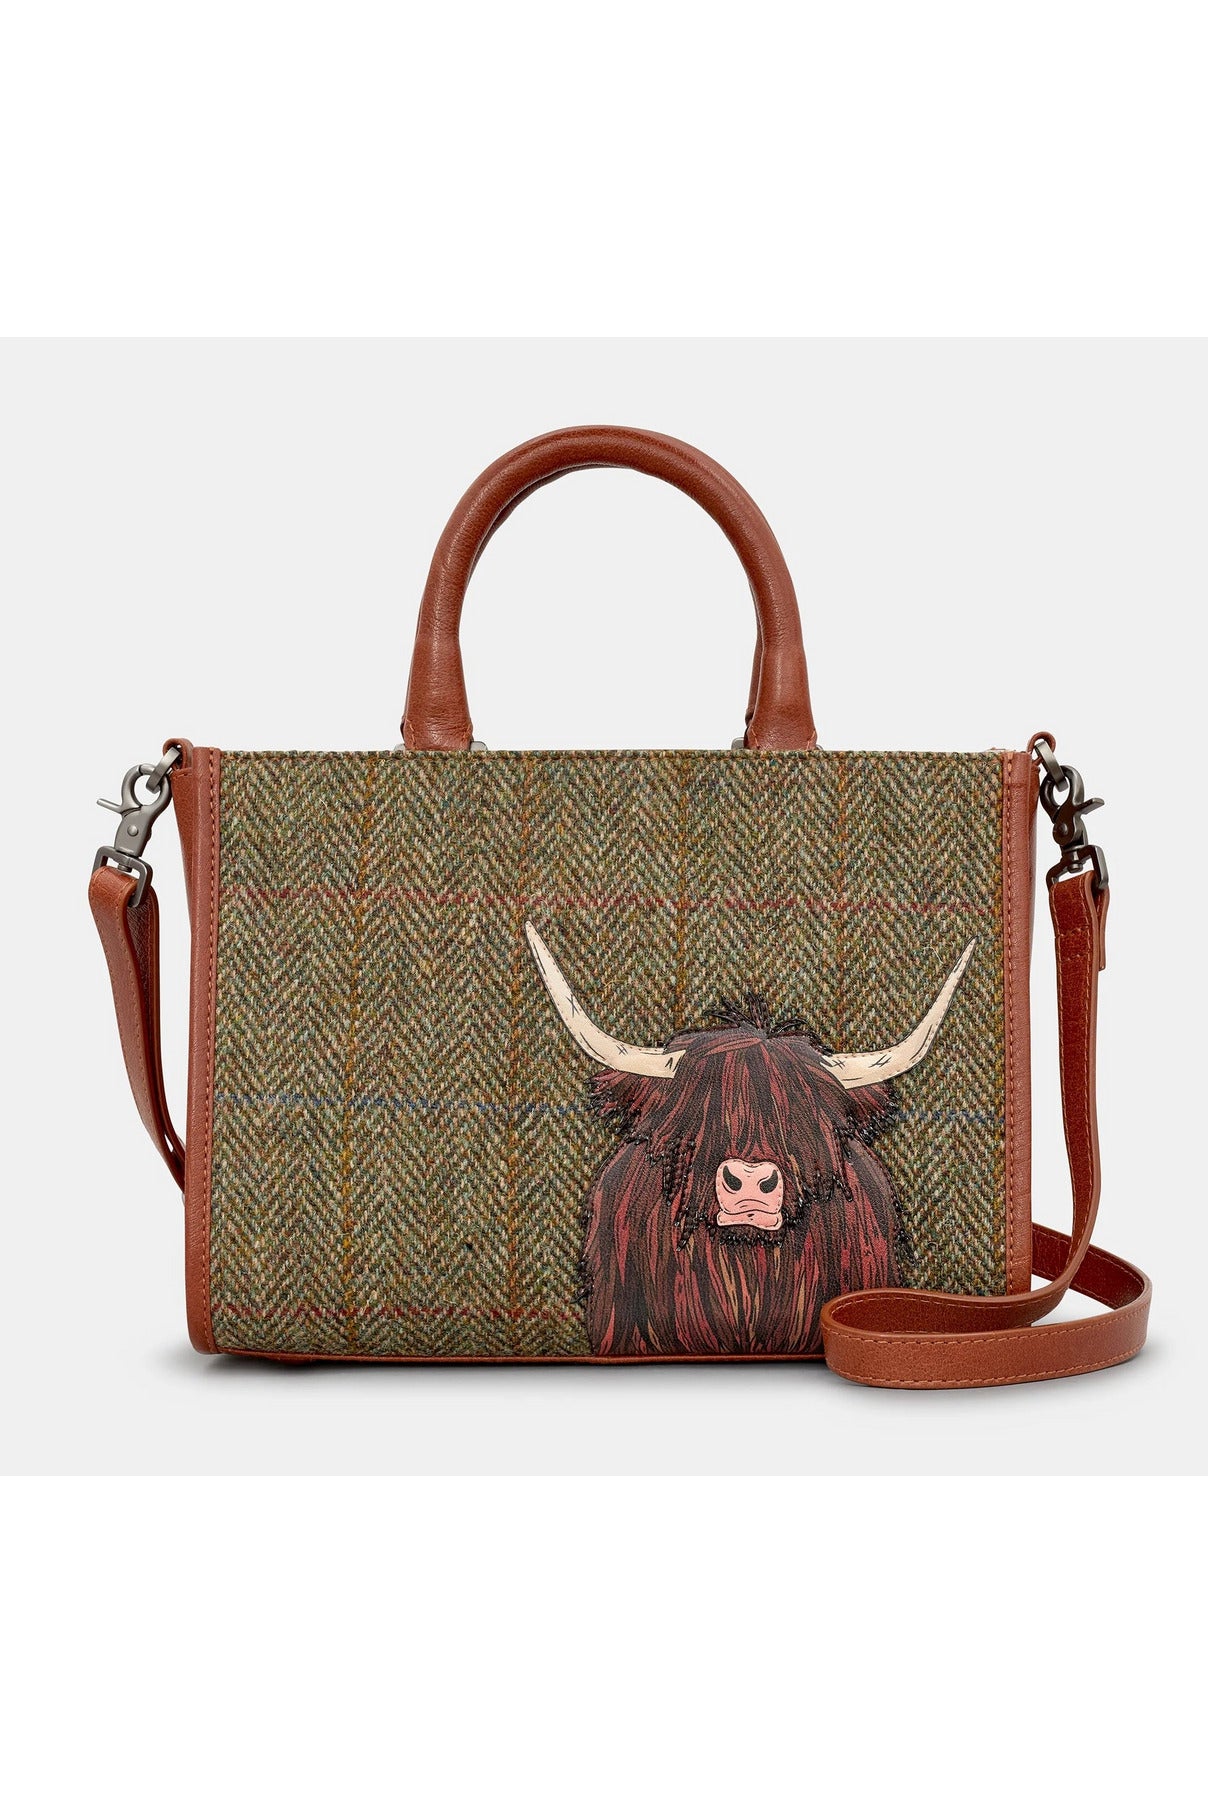 Yoshi Handbag Highland Cow Multiway Grab Bag in brown tweed